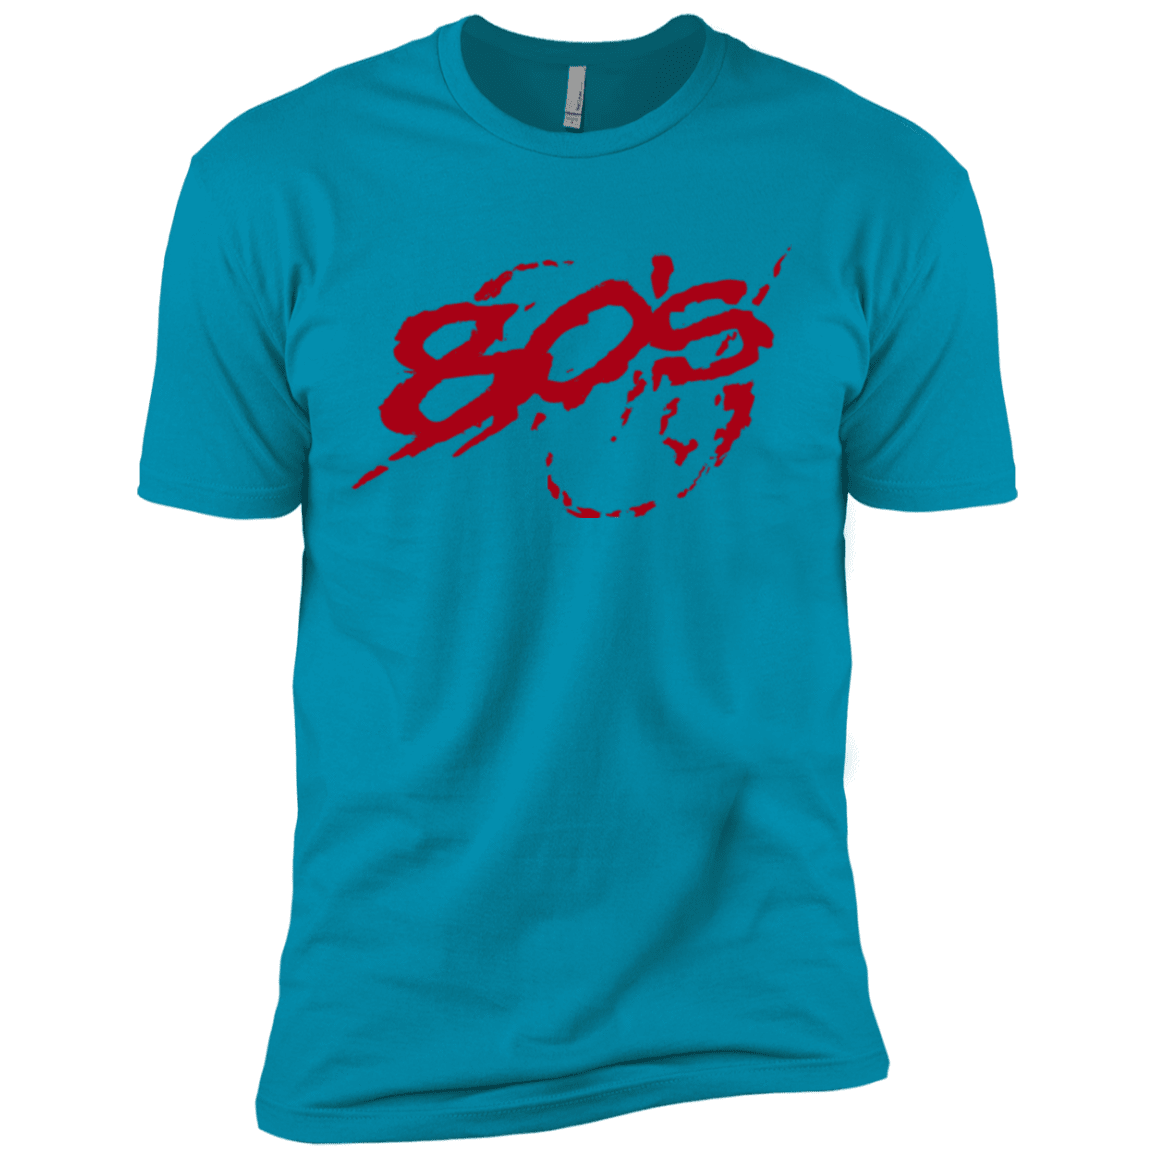 T-Shirts Turquoise / X-Small 80s 300 Men's Premium T-Shirt